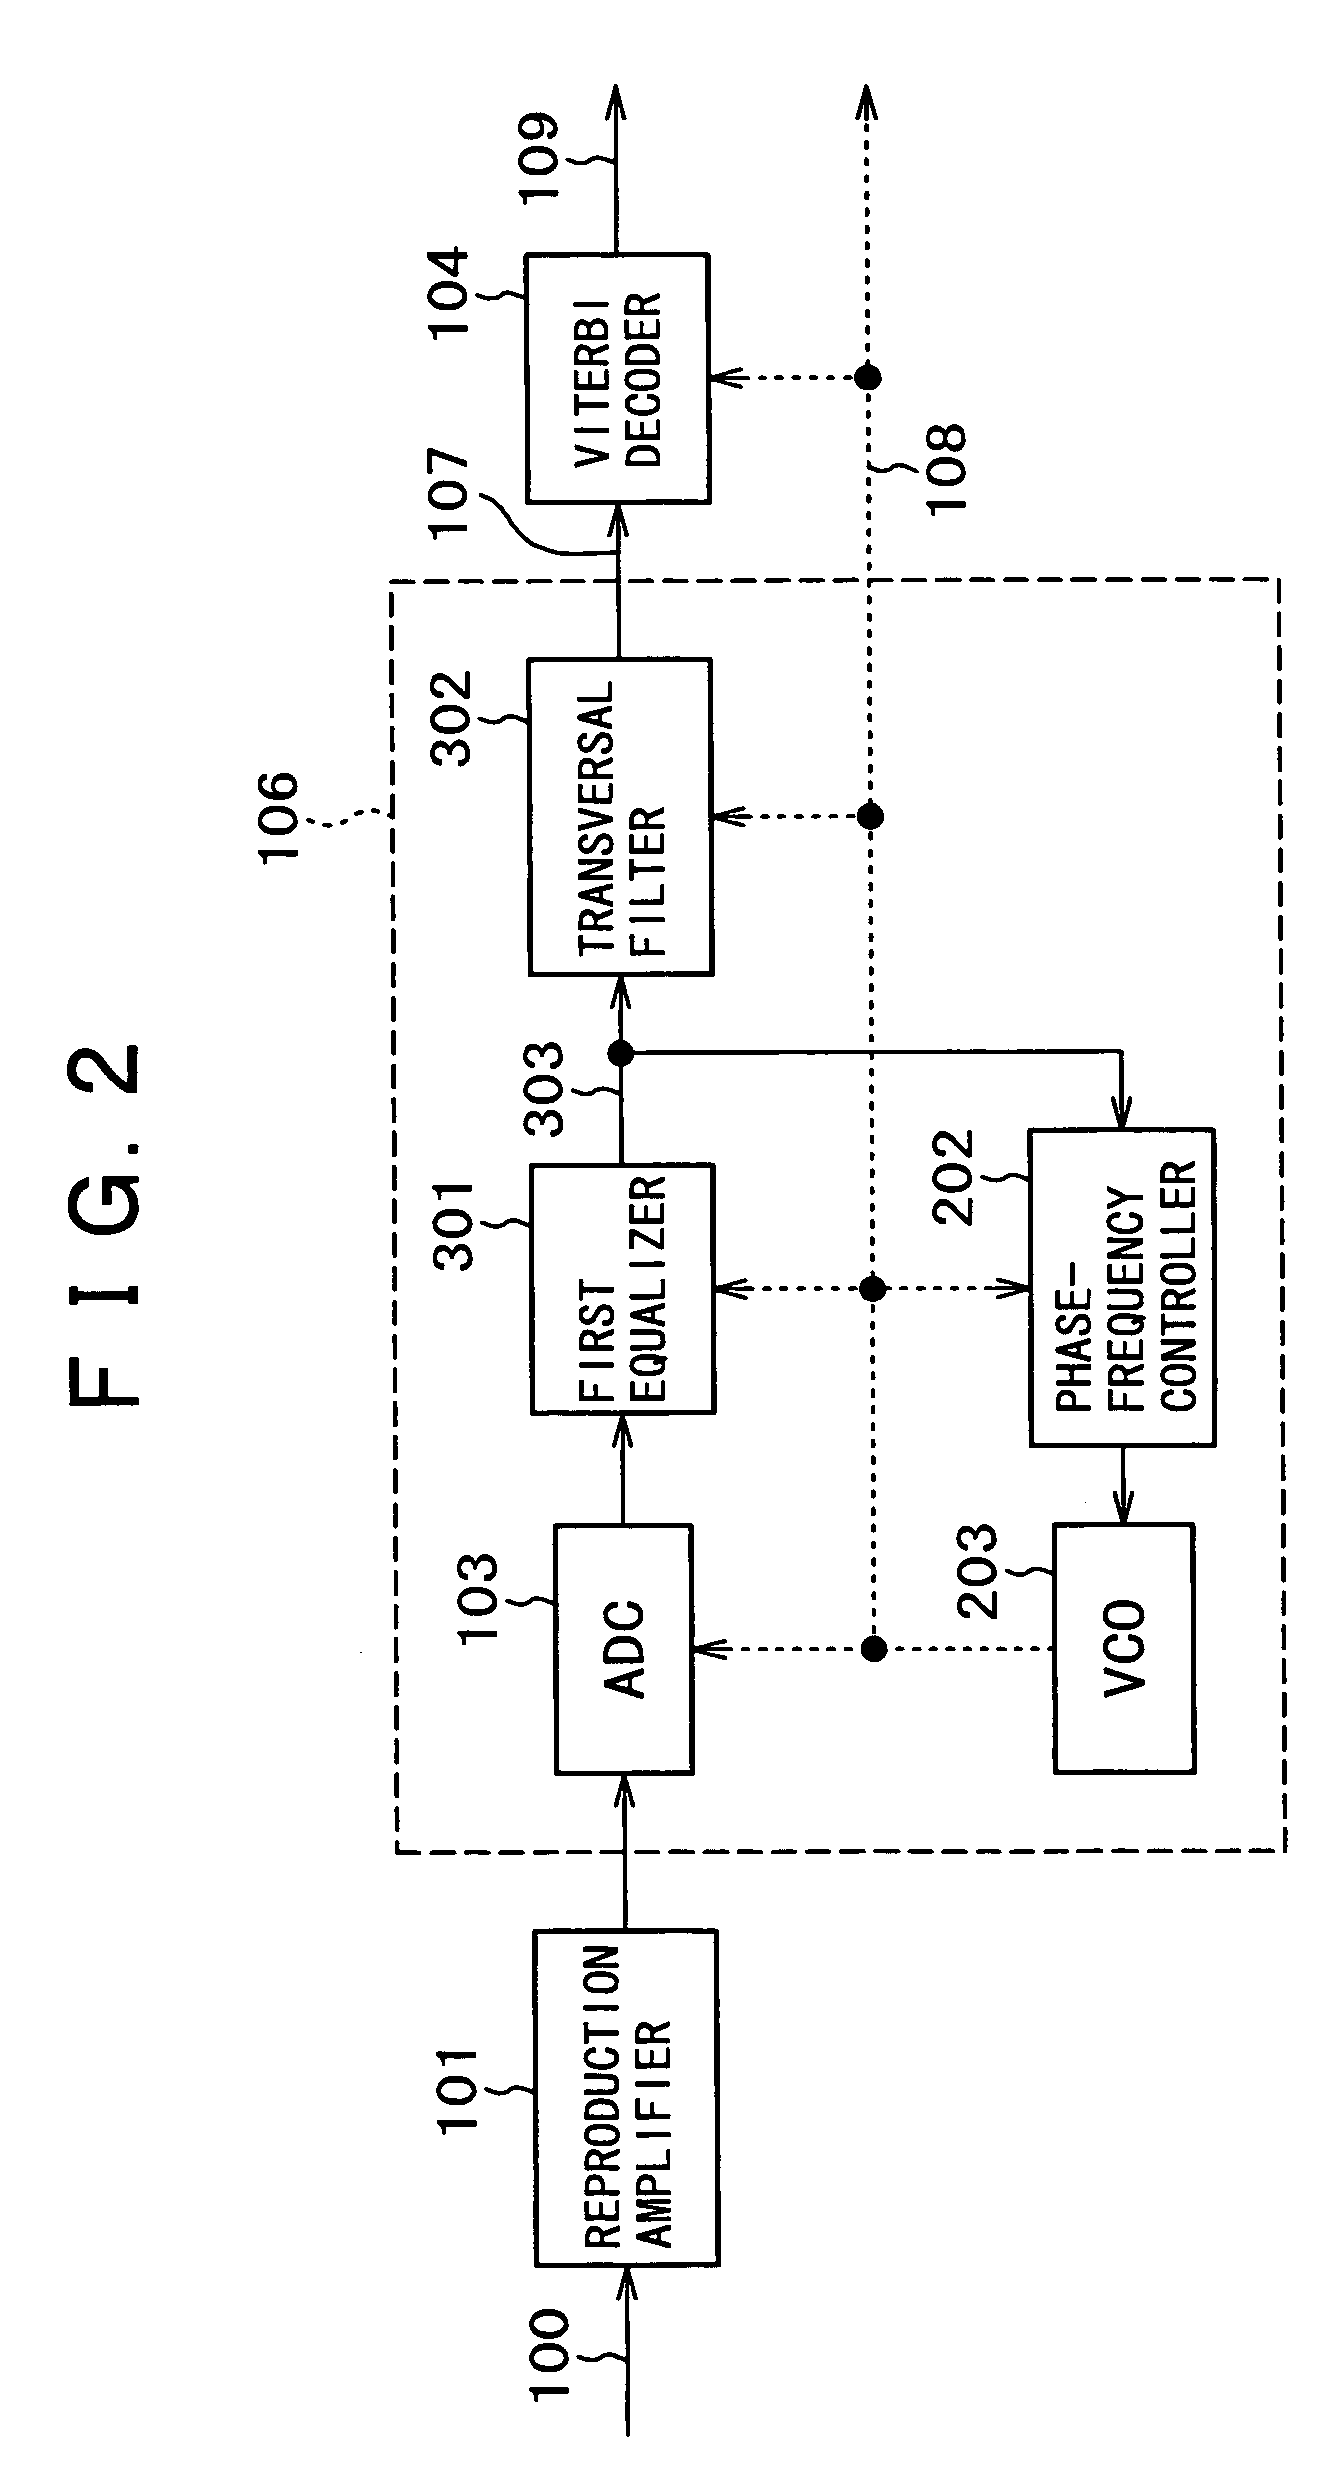 Reproduced signal waveform processing apparatus